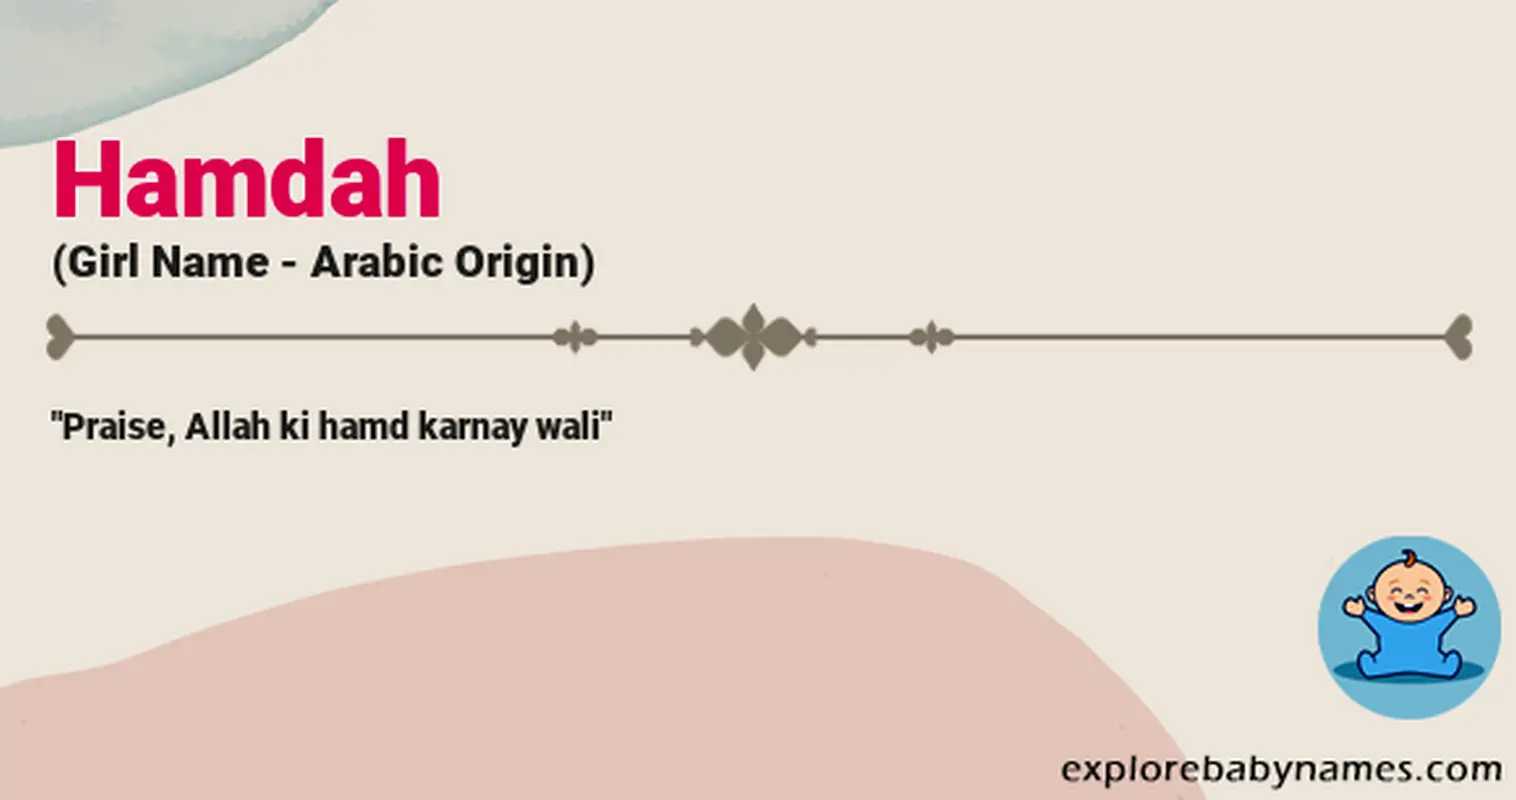 Meaning of Hamdah